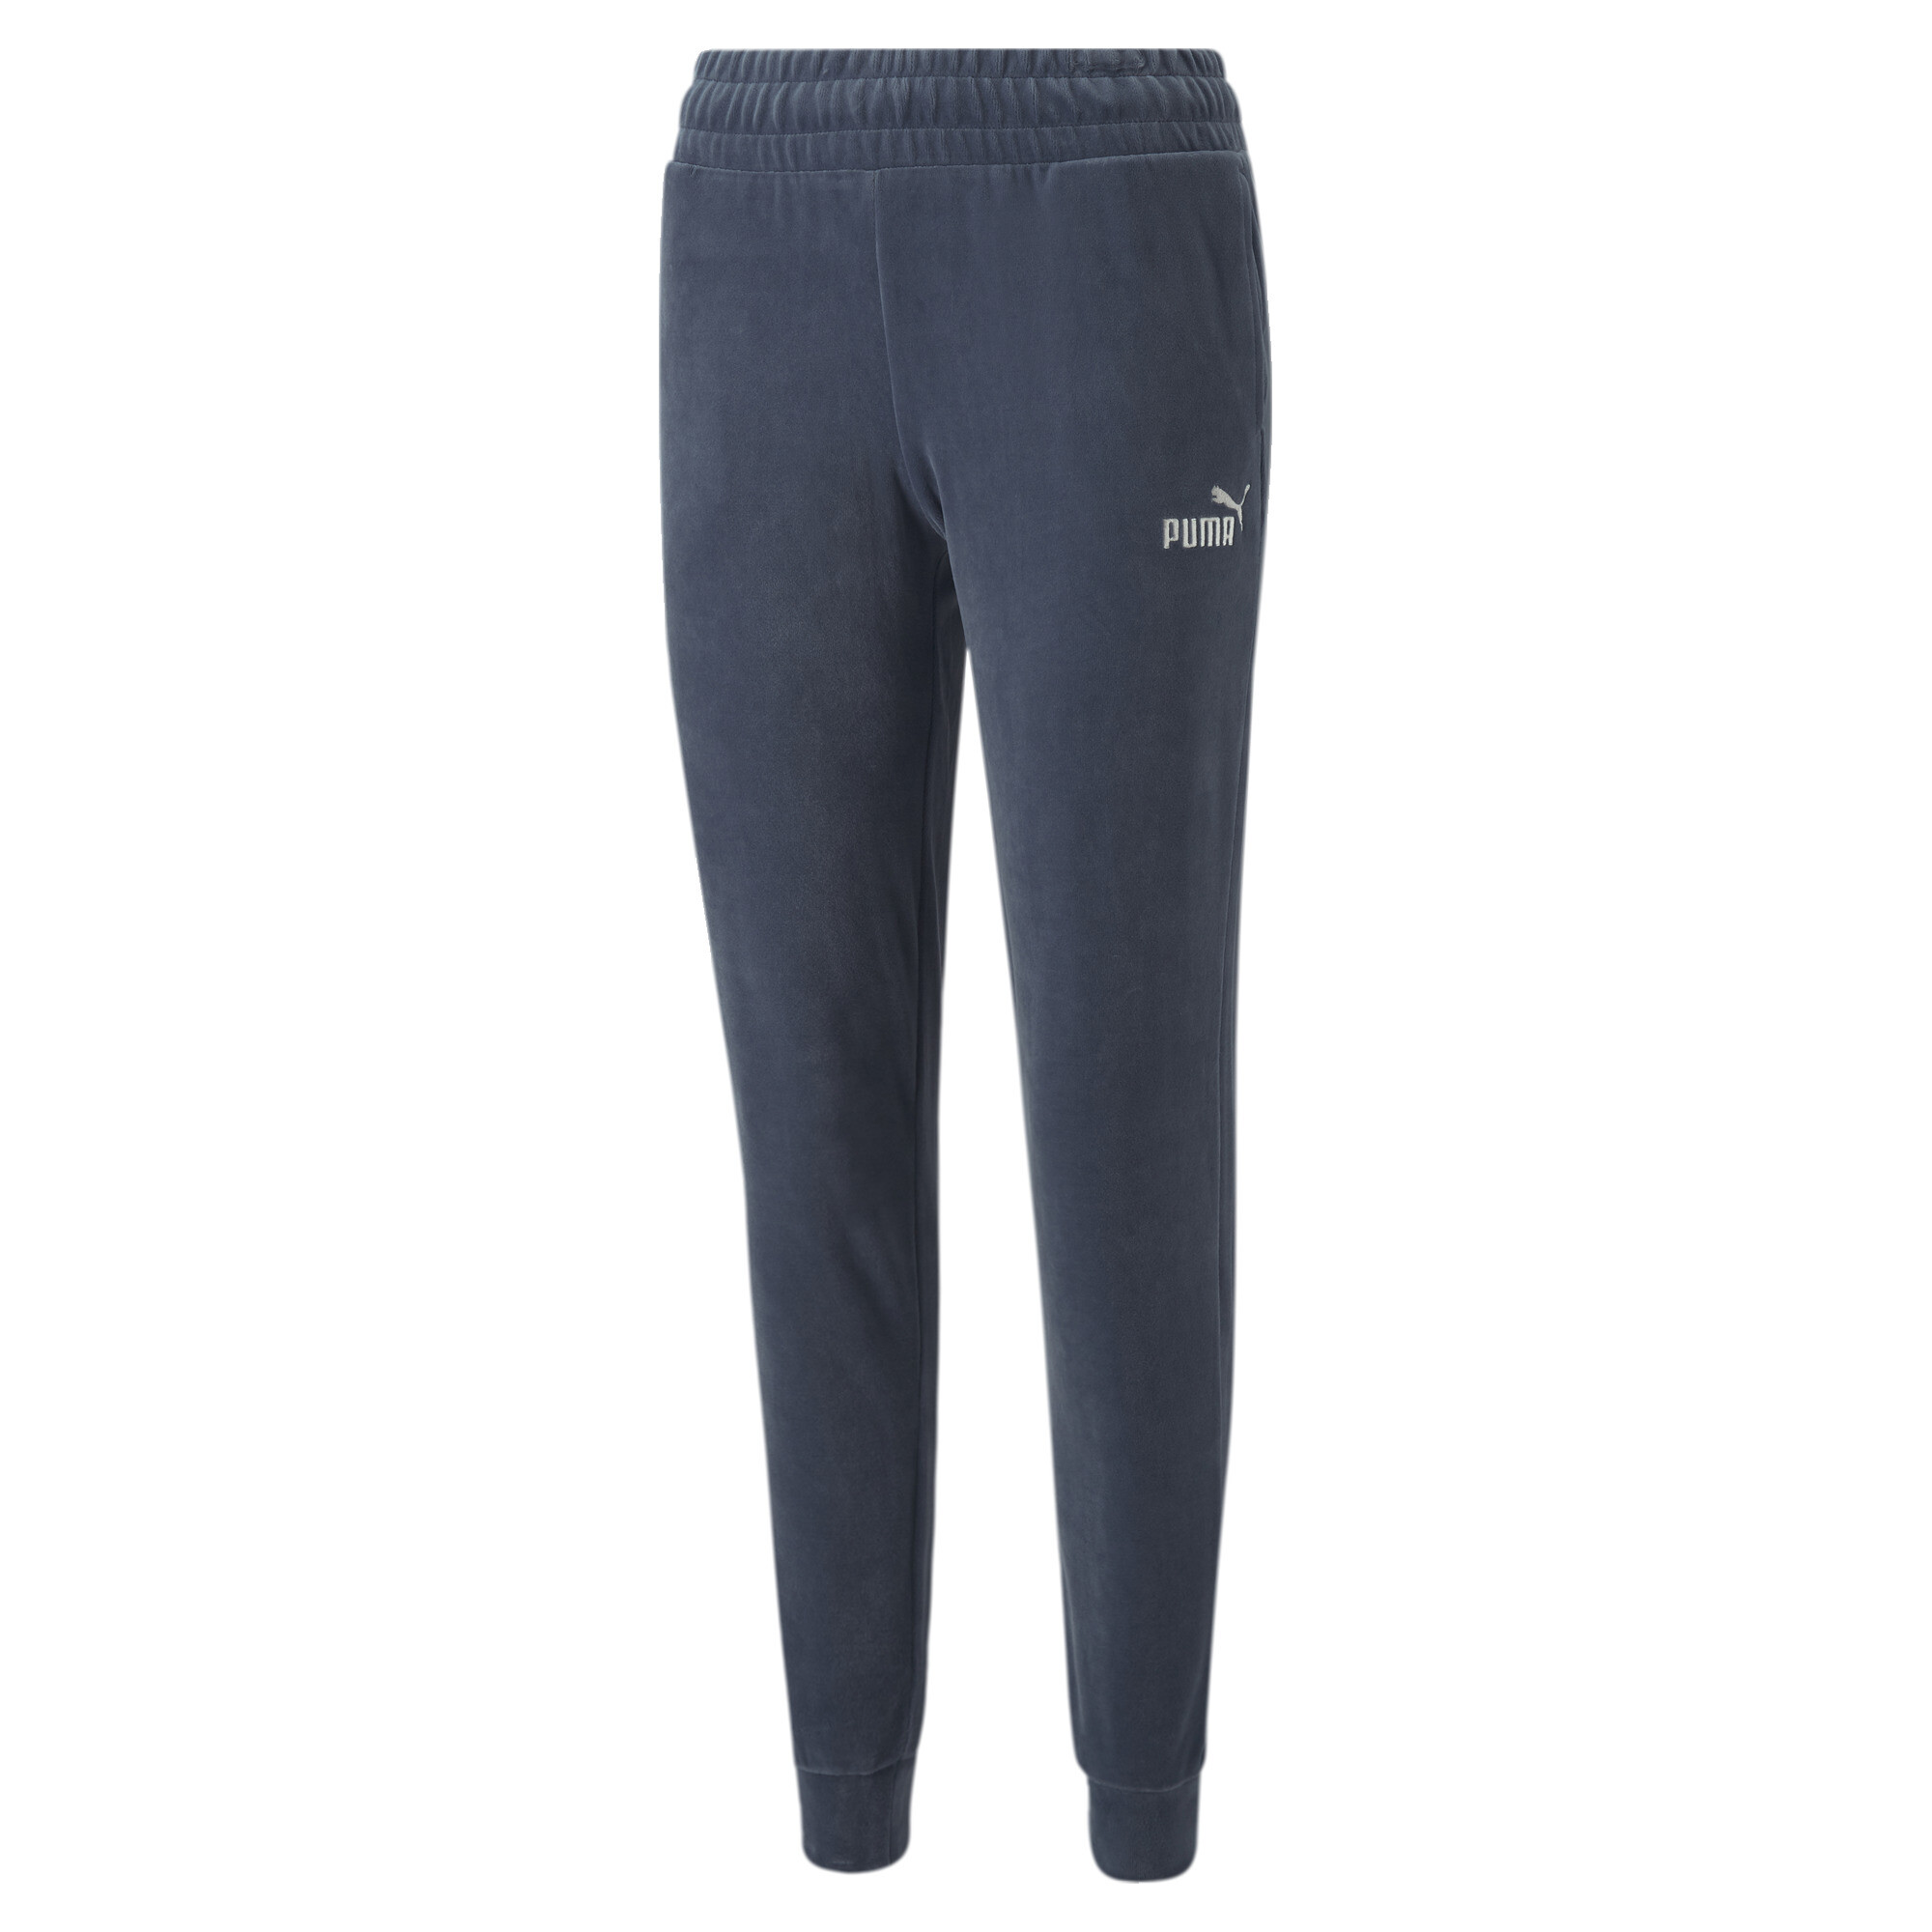 Mens | Puma Velour Casual eBay Pants 84996518 Athletic Grey Essentials Bottoms